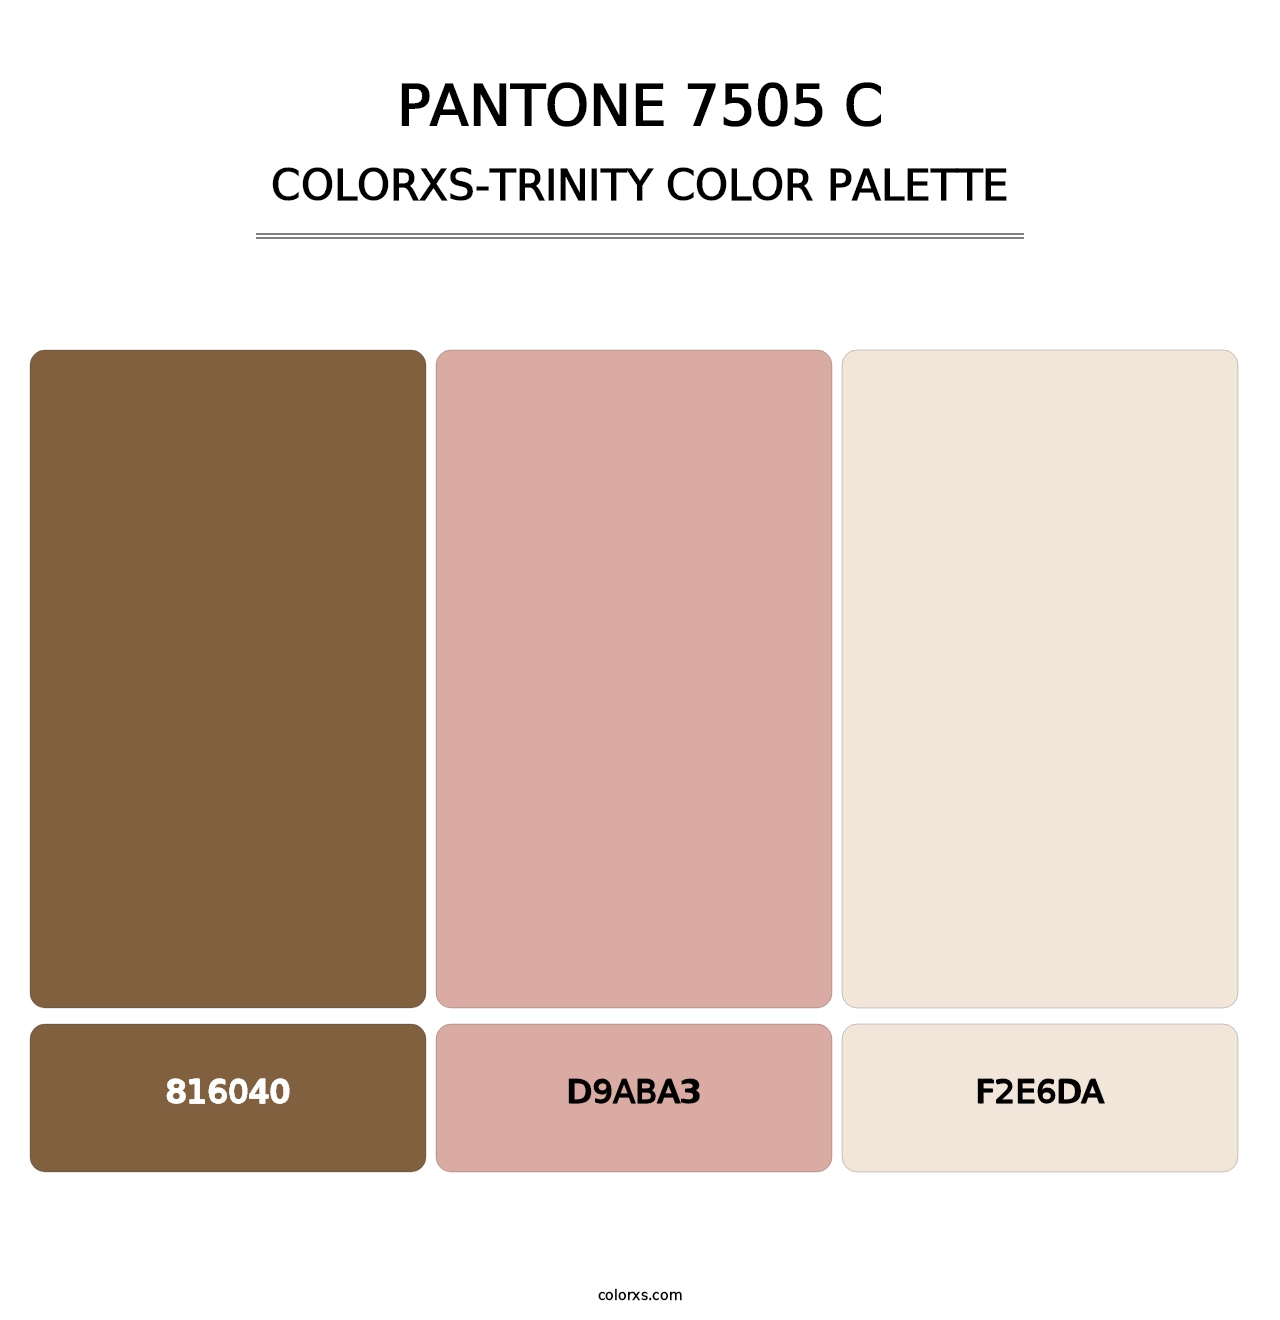 PANTONE 7505 C - Colorxs Trinity Palette